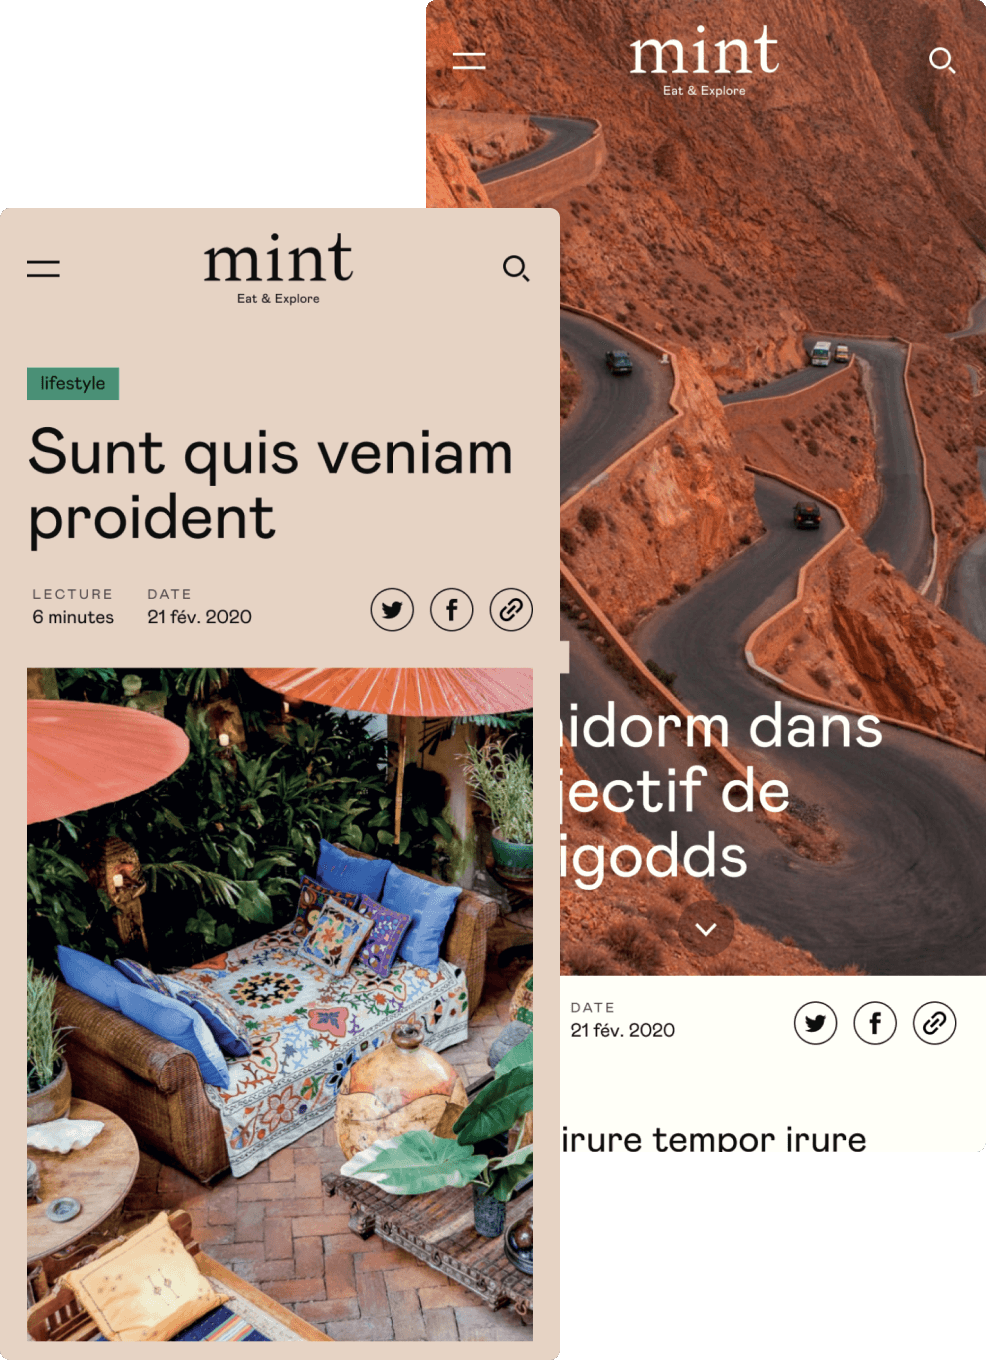 Mint Magazine